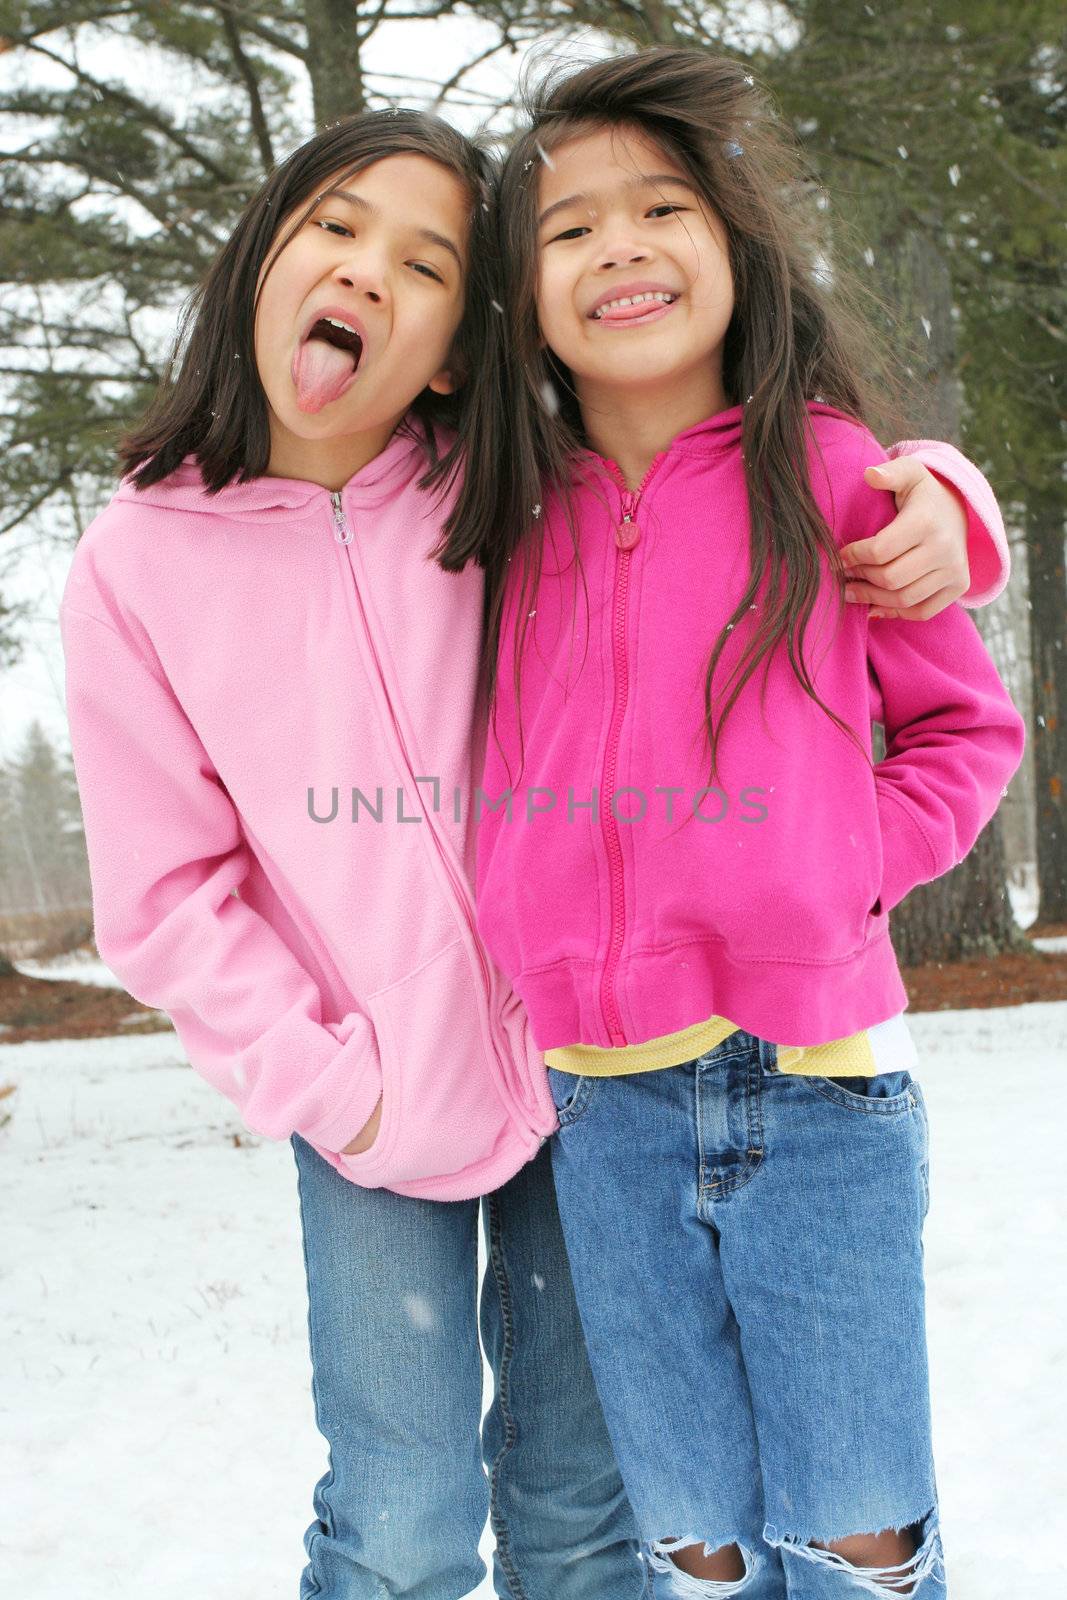 Two girls enjoying the winter by jarenwicklund